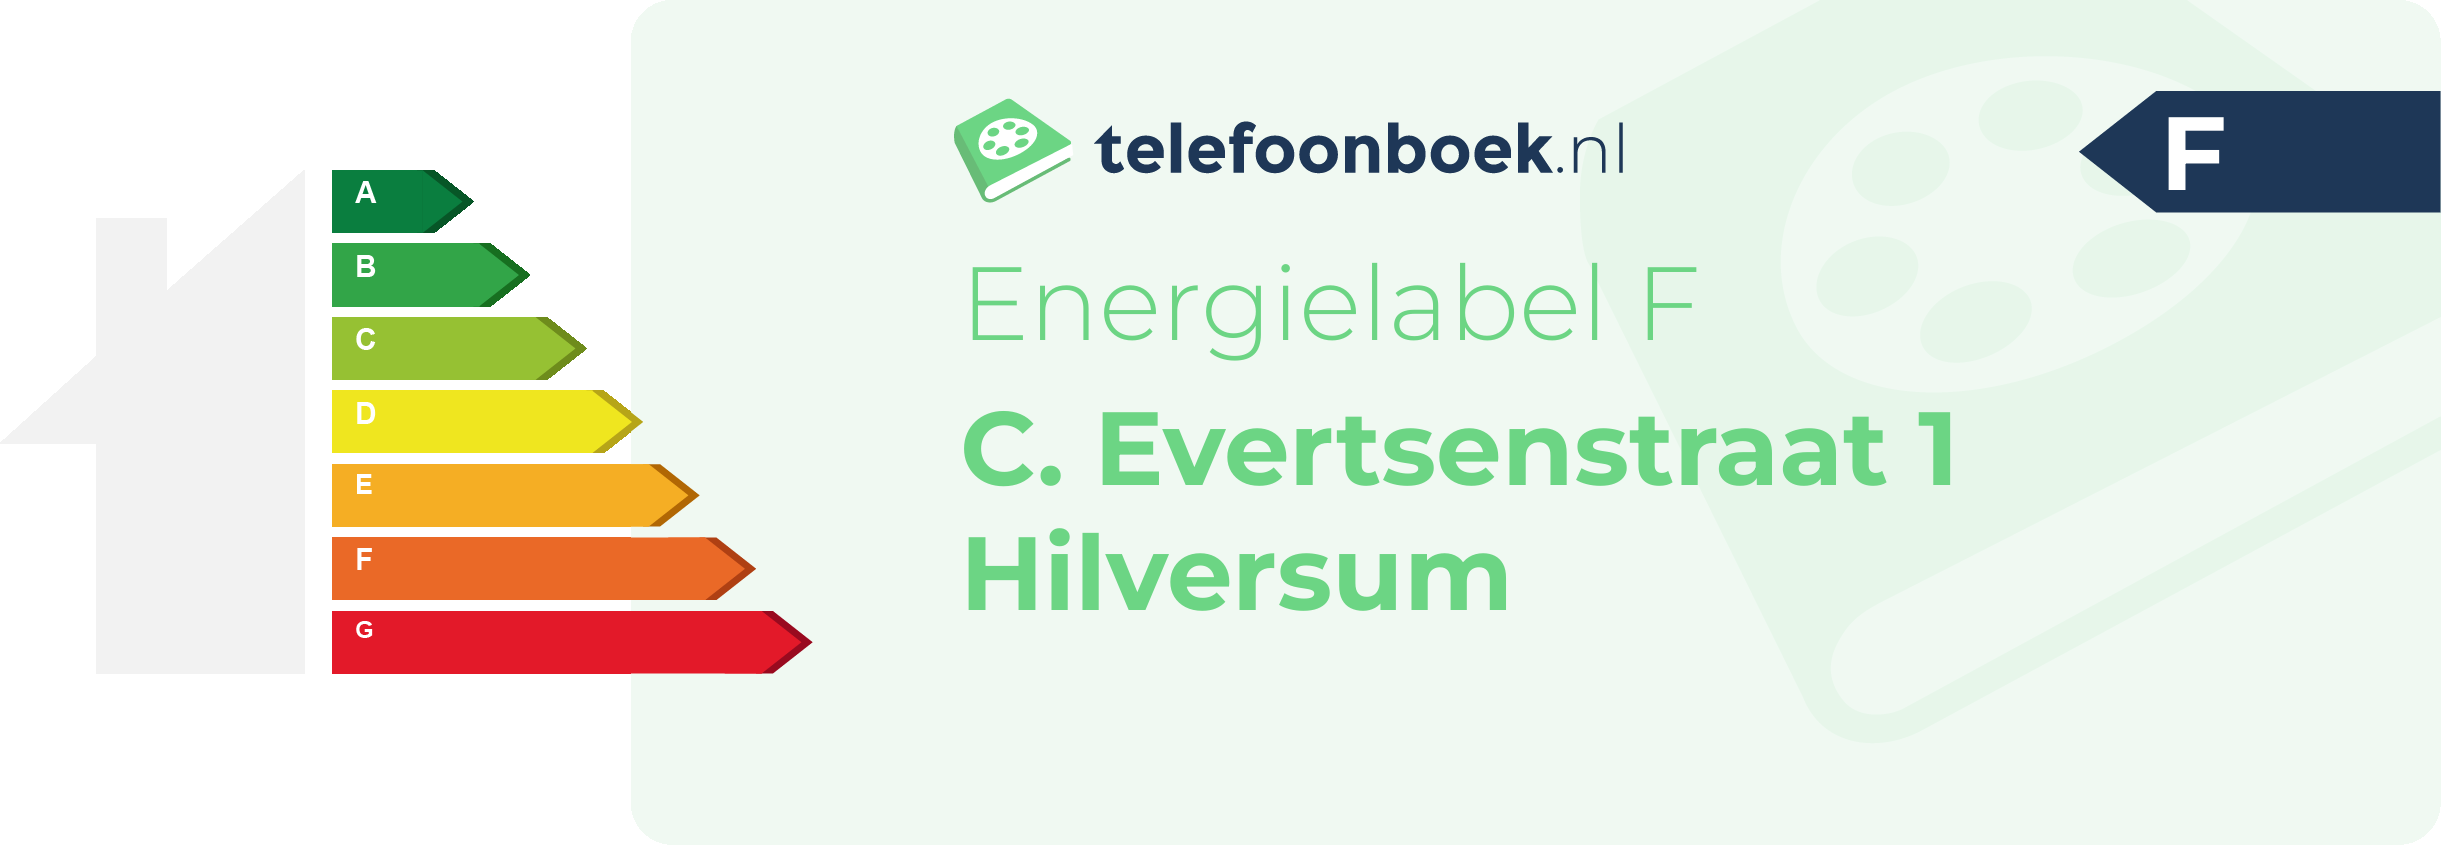 Energielabel C. Evertsenstraat 1 Hilversum